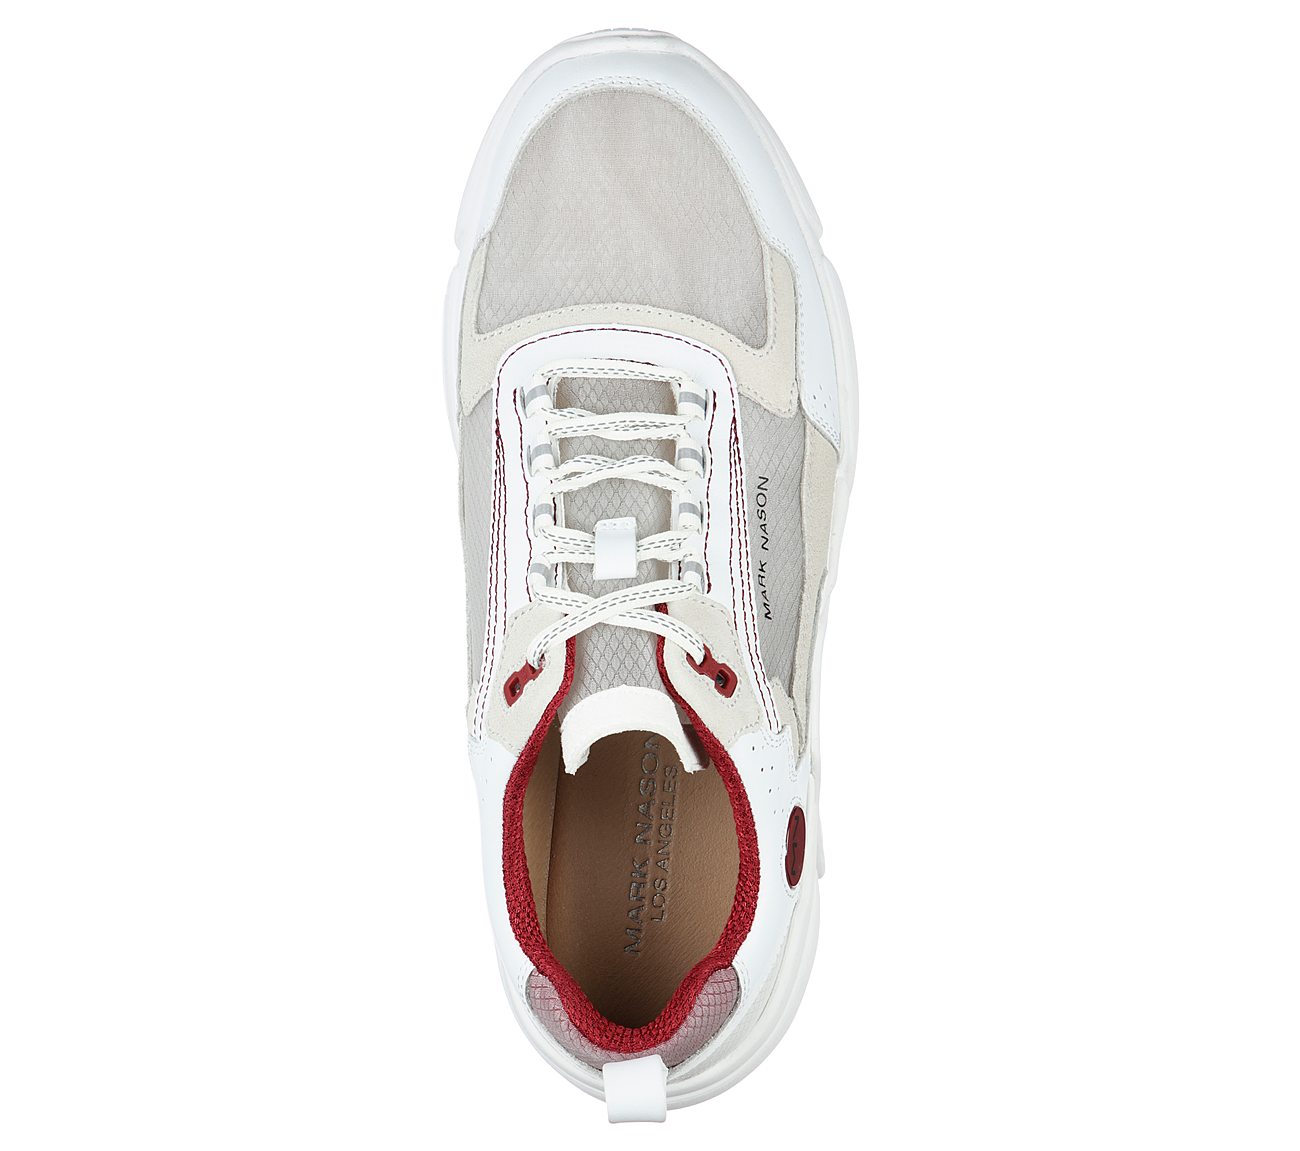 BLOCK - HAZE, WHITE/RED Footwear Top View